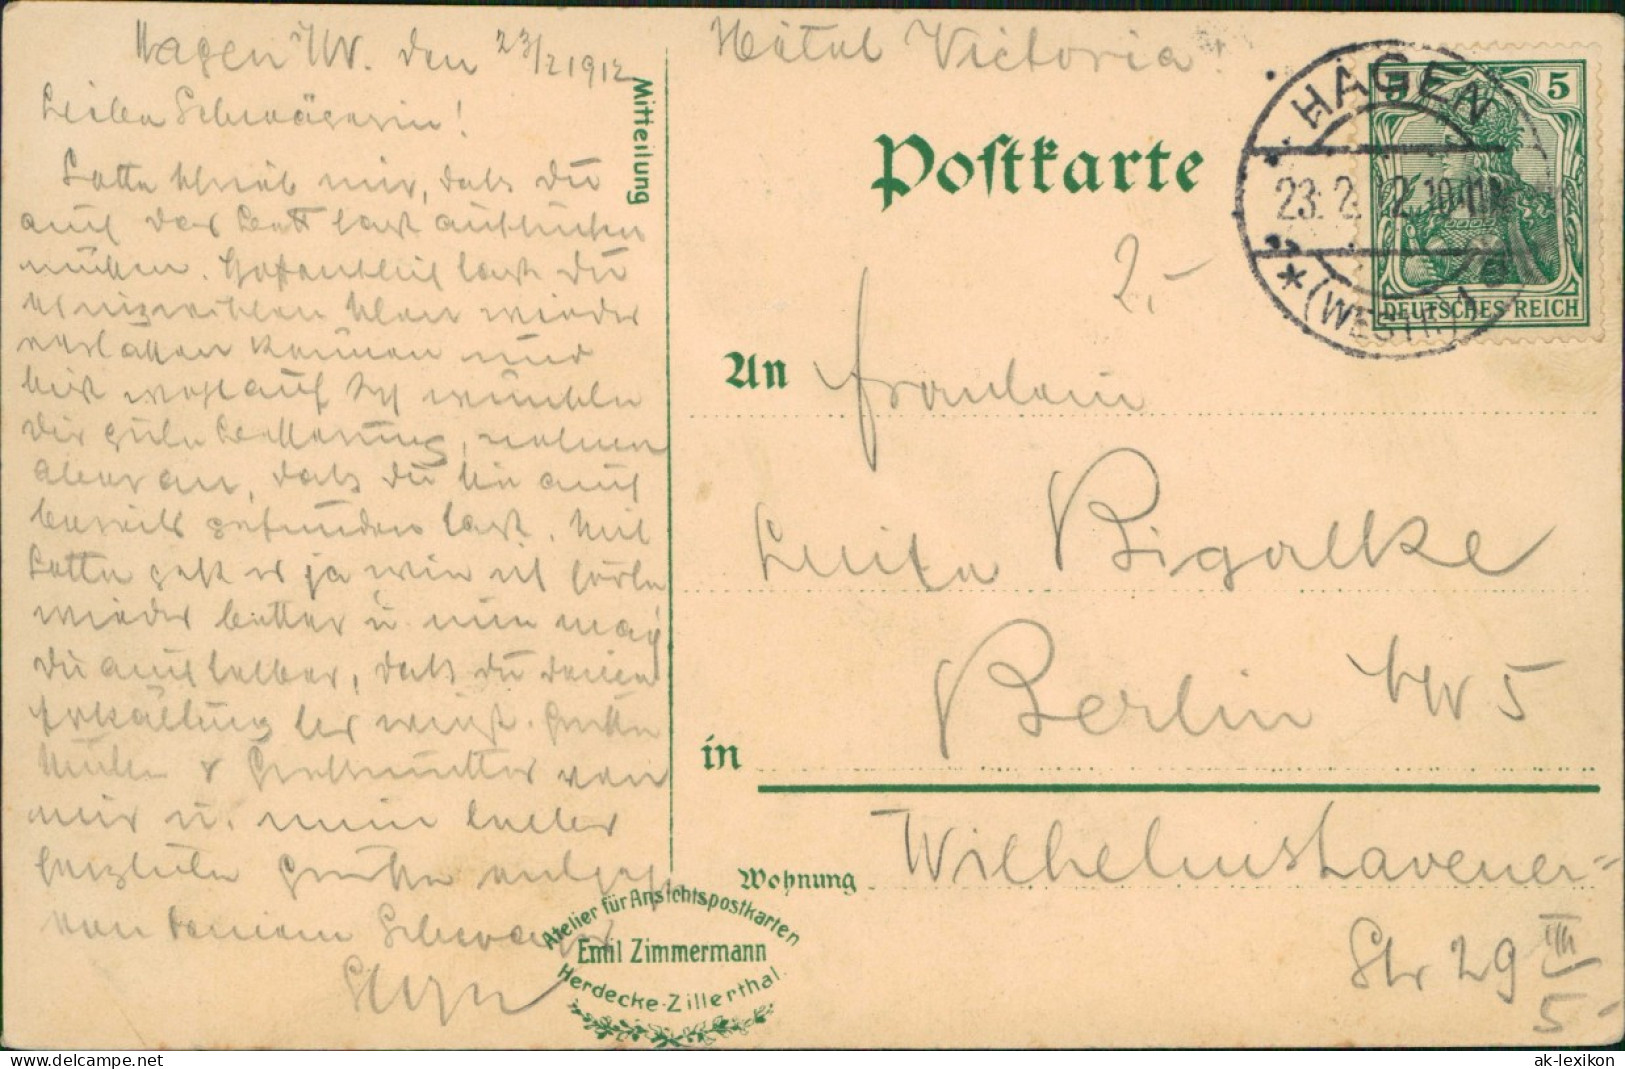 Ansichtskarte Syburg-Dortmund Hohensyburgdenkmal - Künstlerkarte 1912 - Dortmund